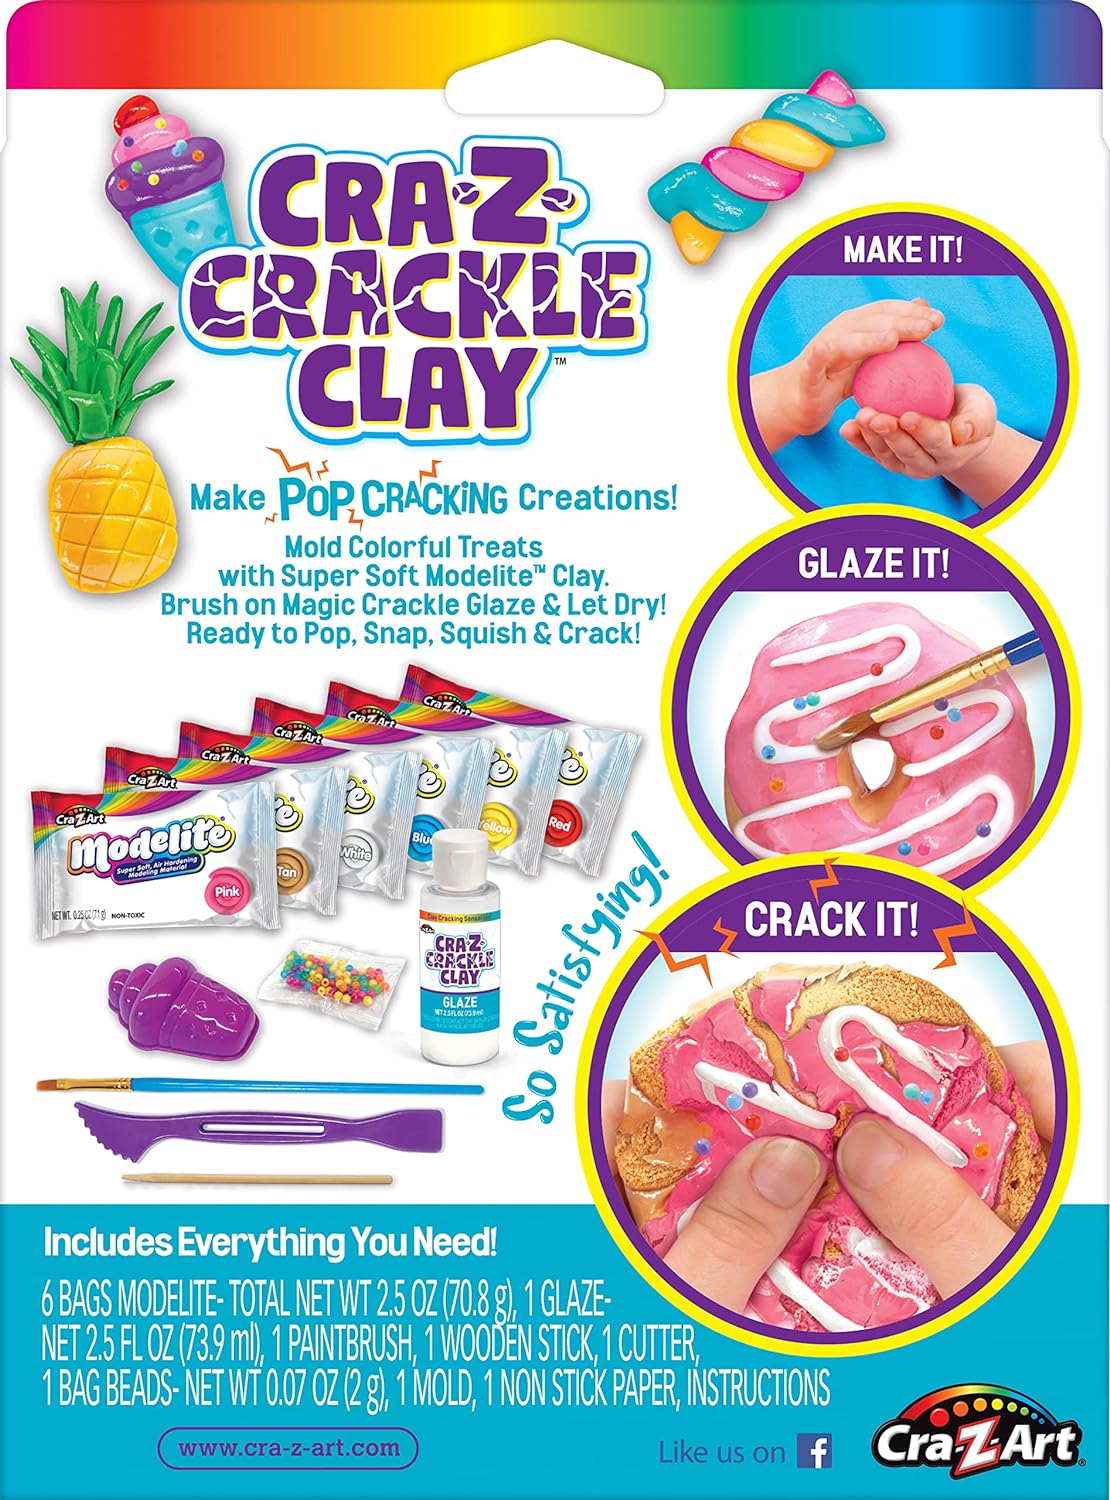 Cra-Z-Crackle Create & Crack Sweet Treats